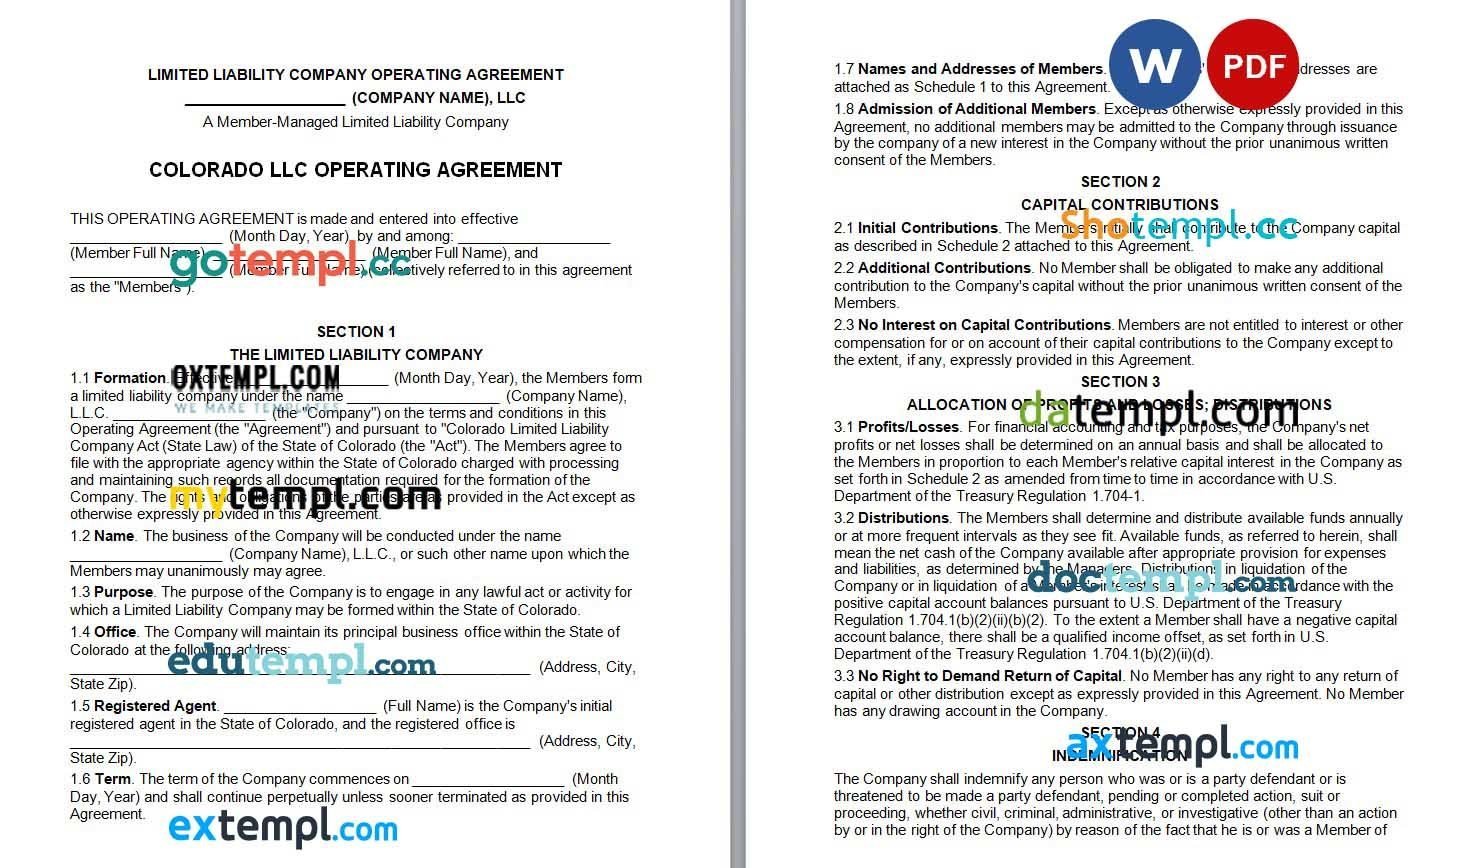 Colorado Multi-Member LLC Operating Agreement Word example, fully editable